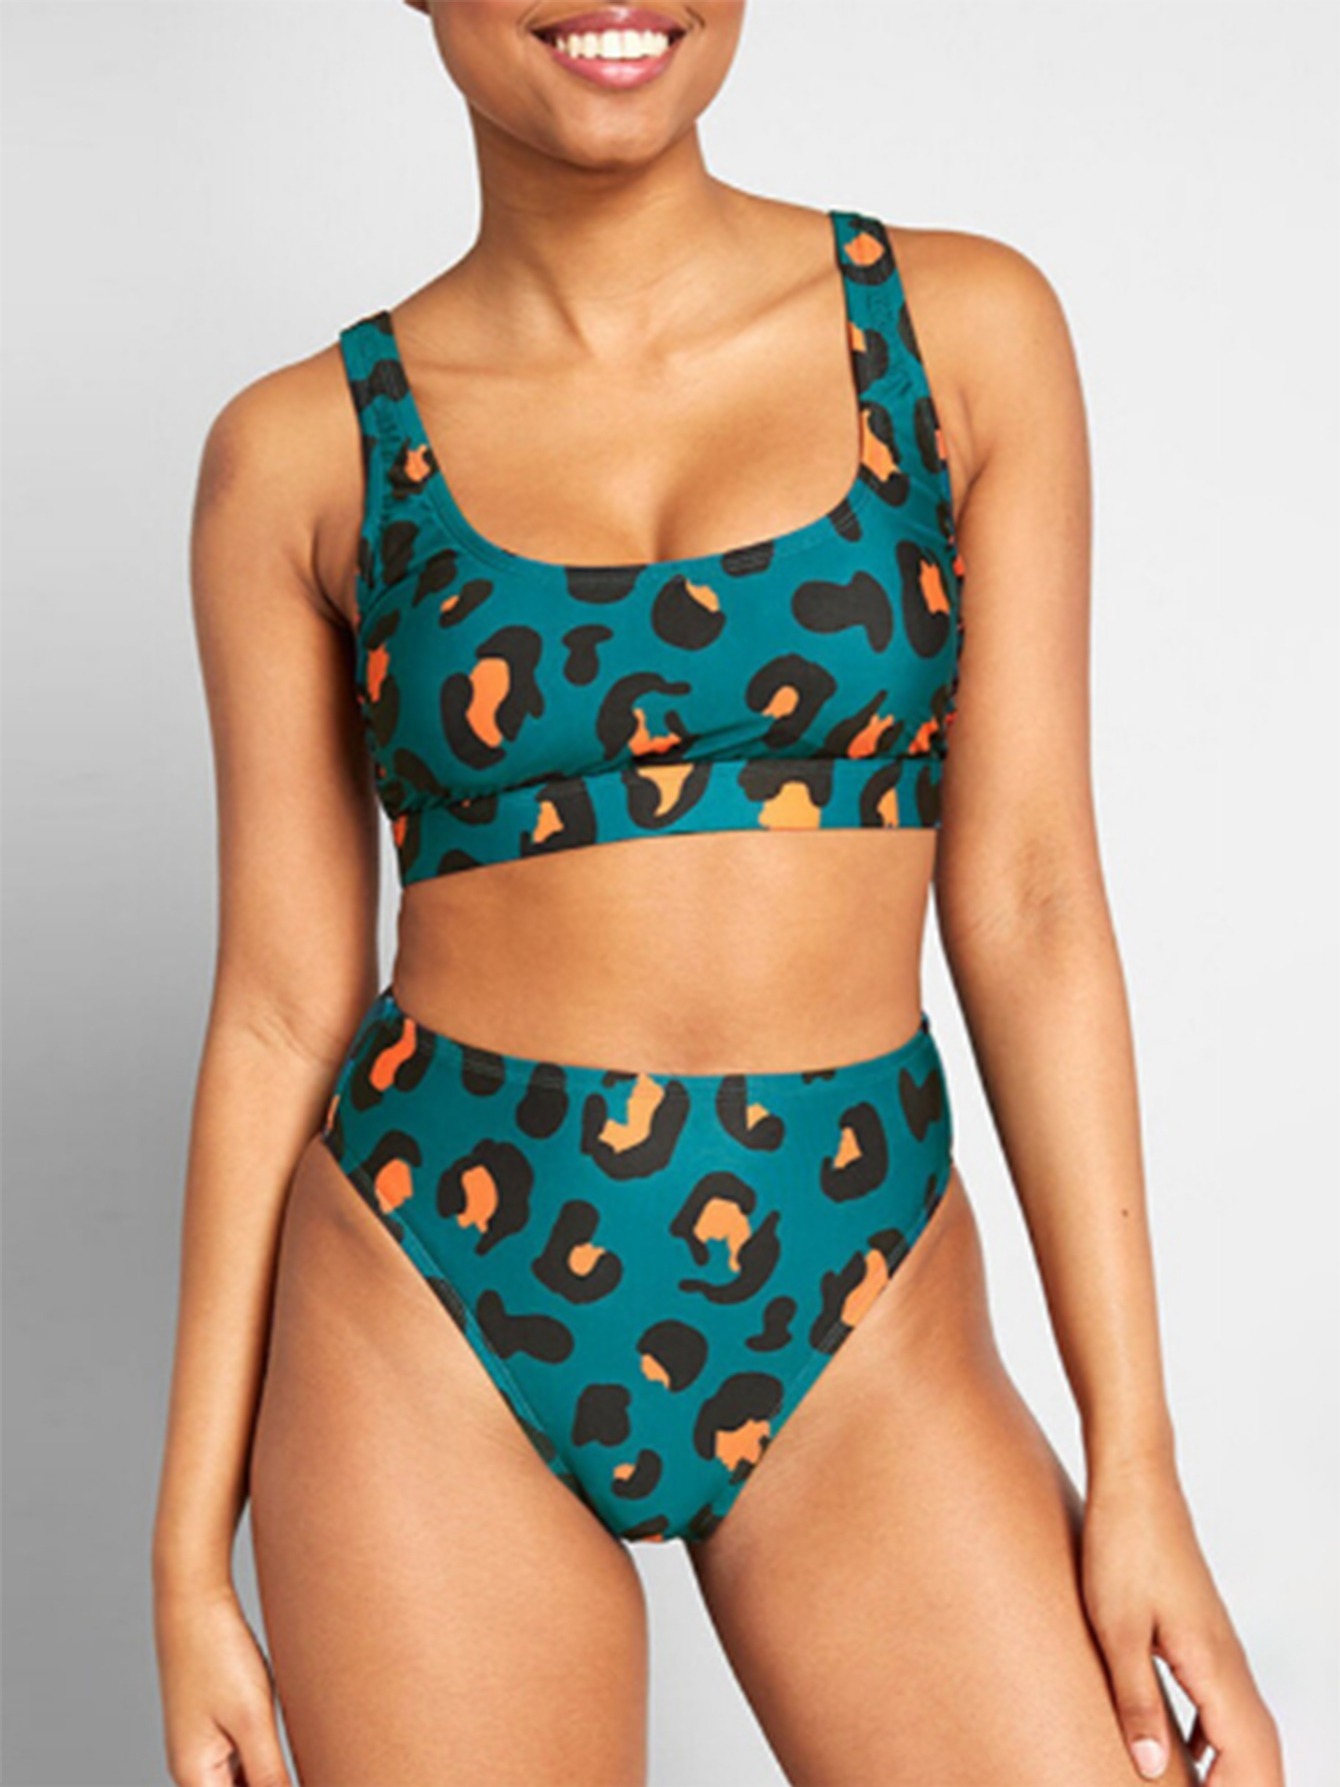 FOUND: The Kmart leopard print bikini and one piece under $25.